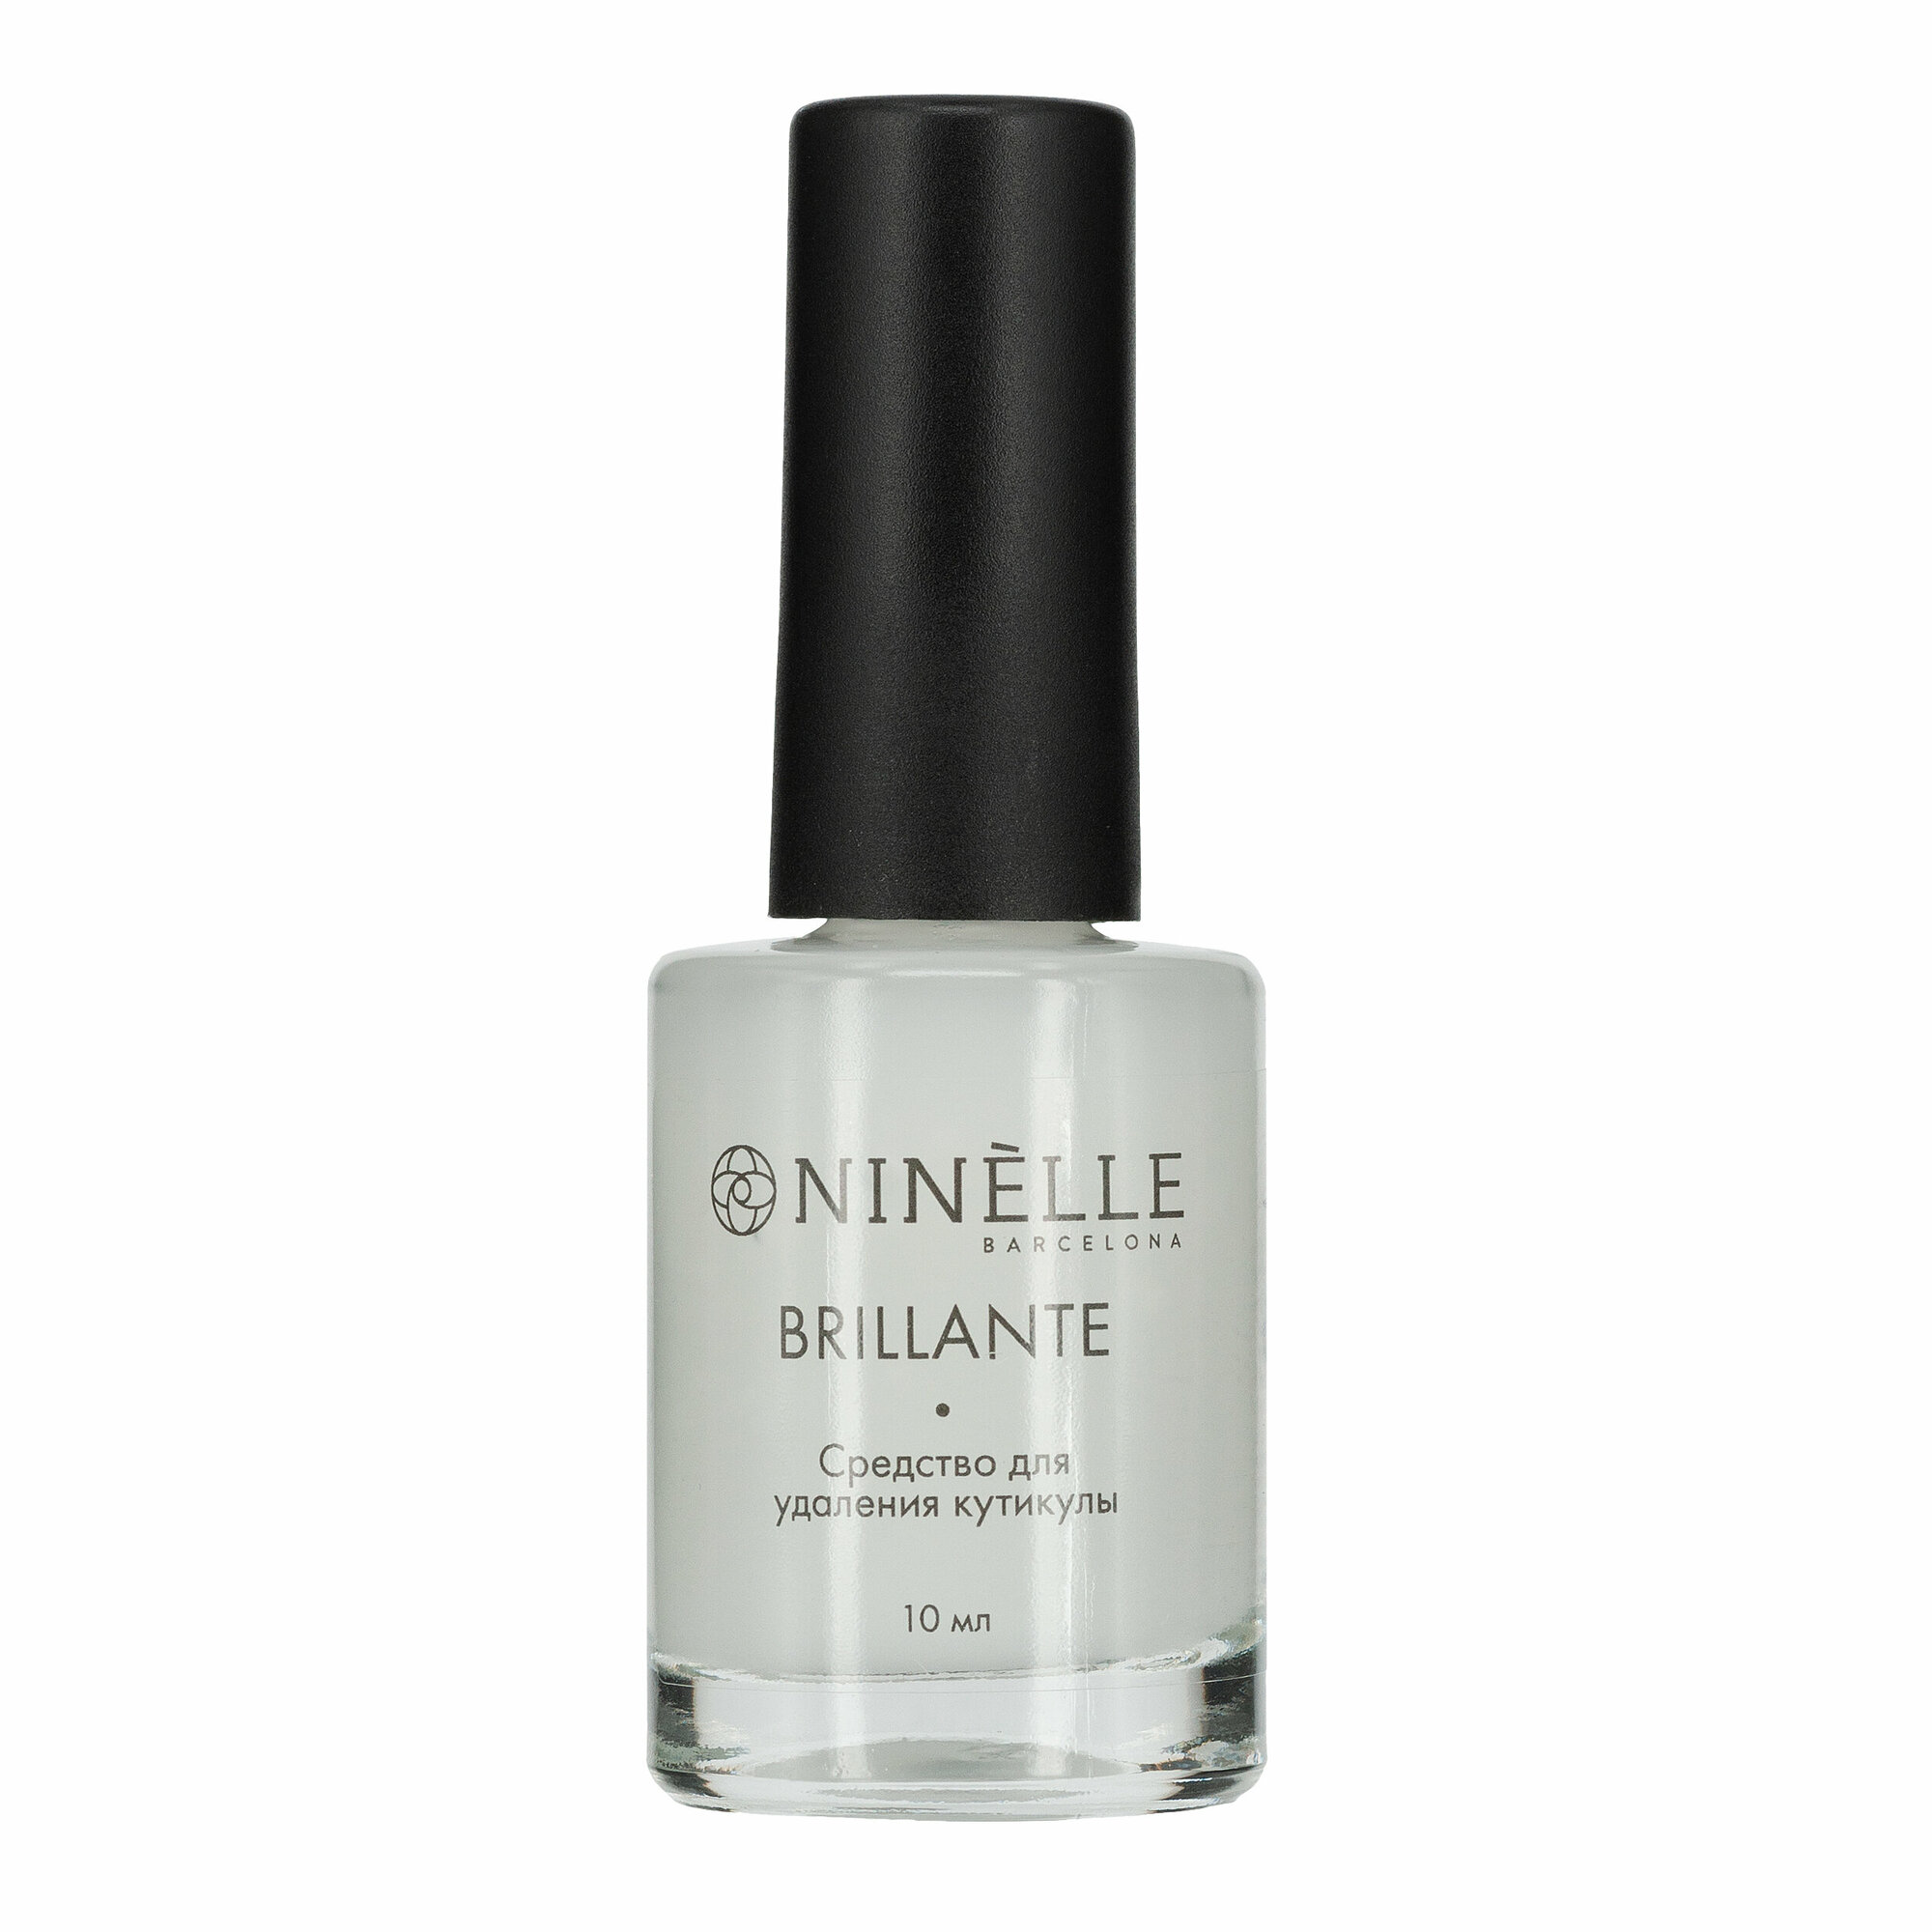 Ninelle средство для удаления кутикулы BRILLANTE марки NINELLE №203